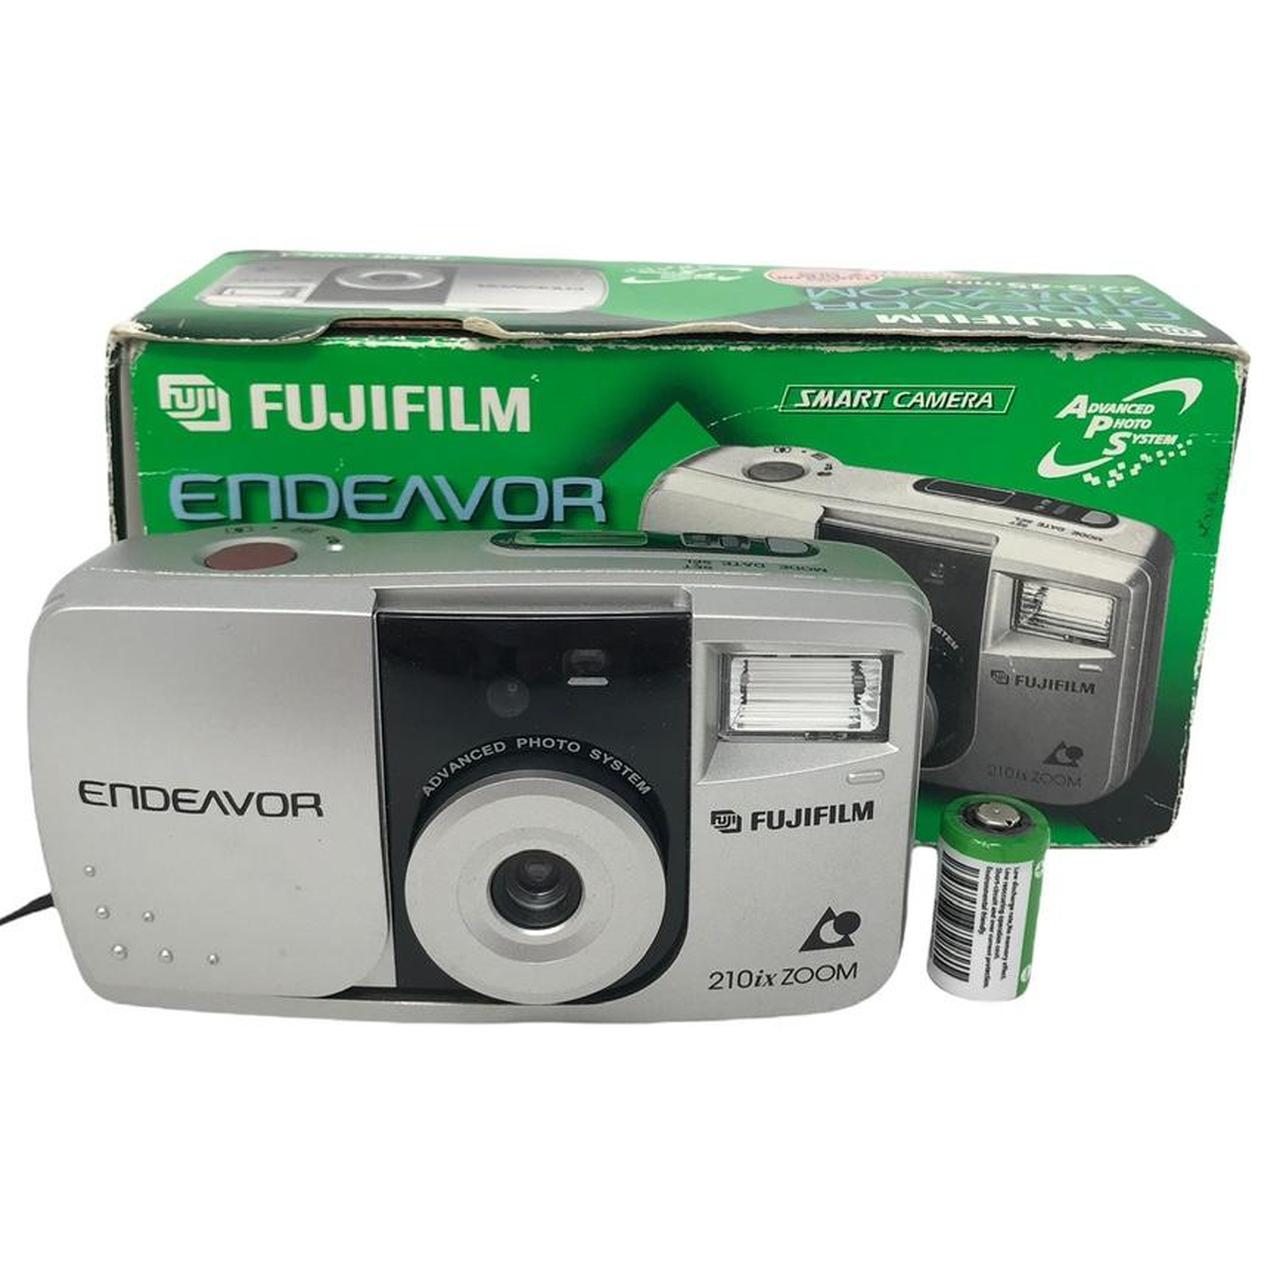 Product Image 1 - Fuji Fujifilm Endeavor Film Camera

New